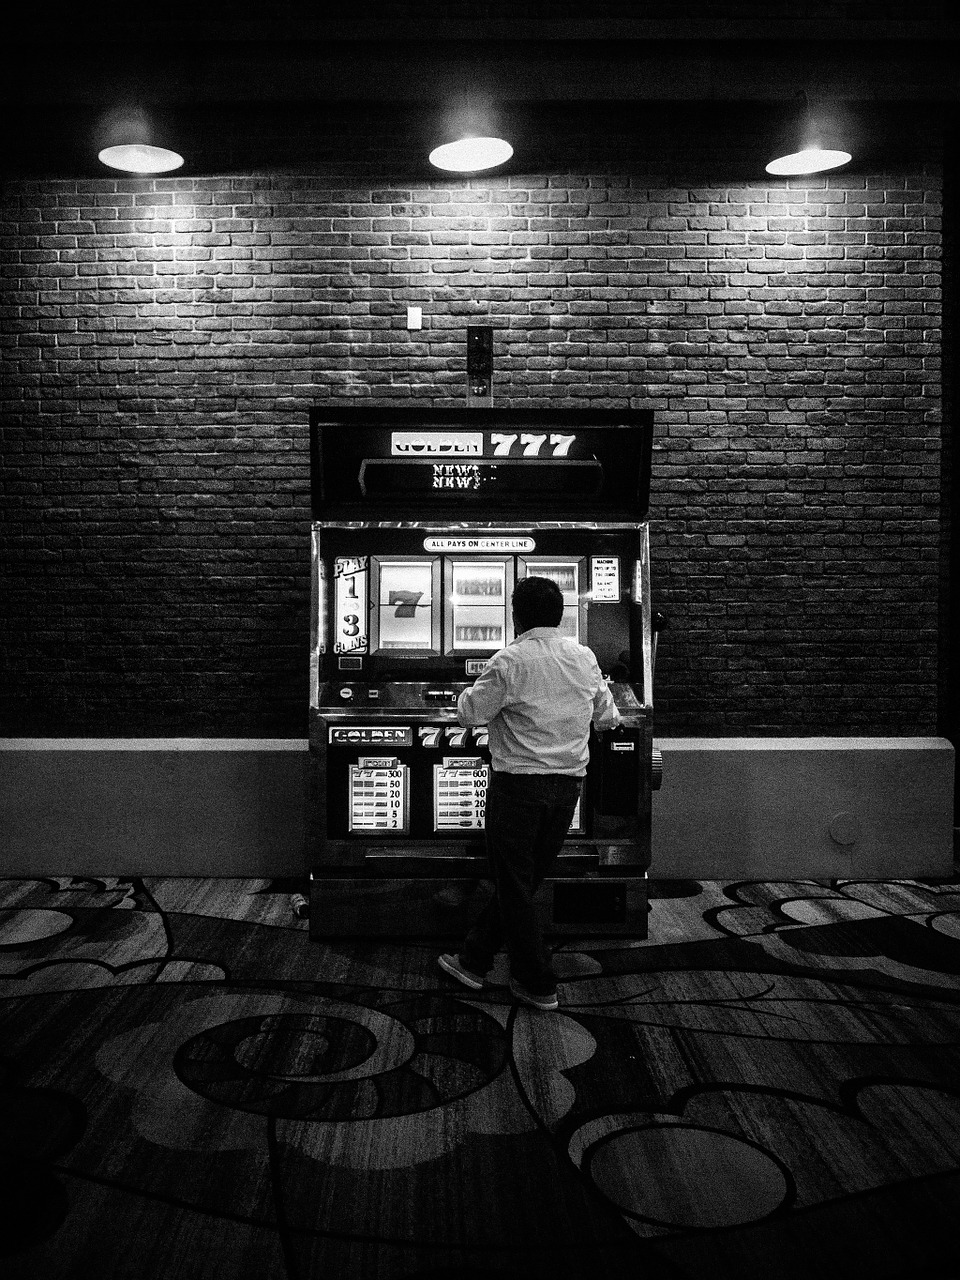 vegas slots slot machine free photo